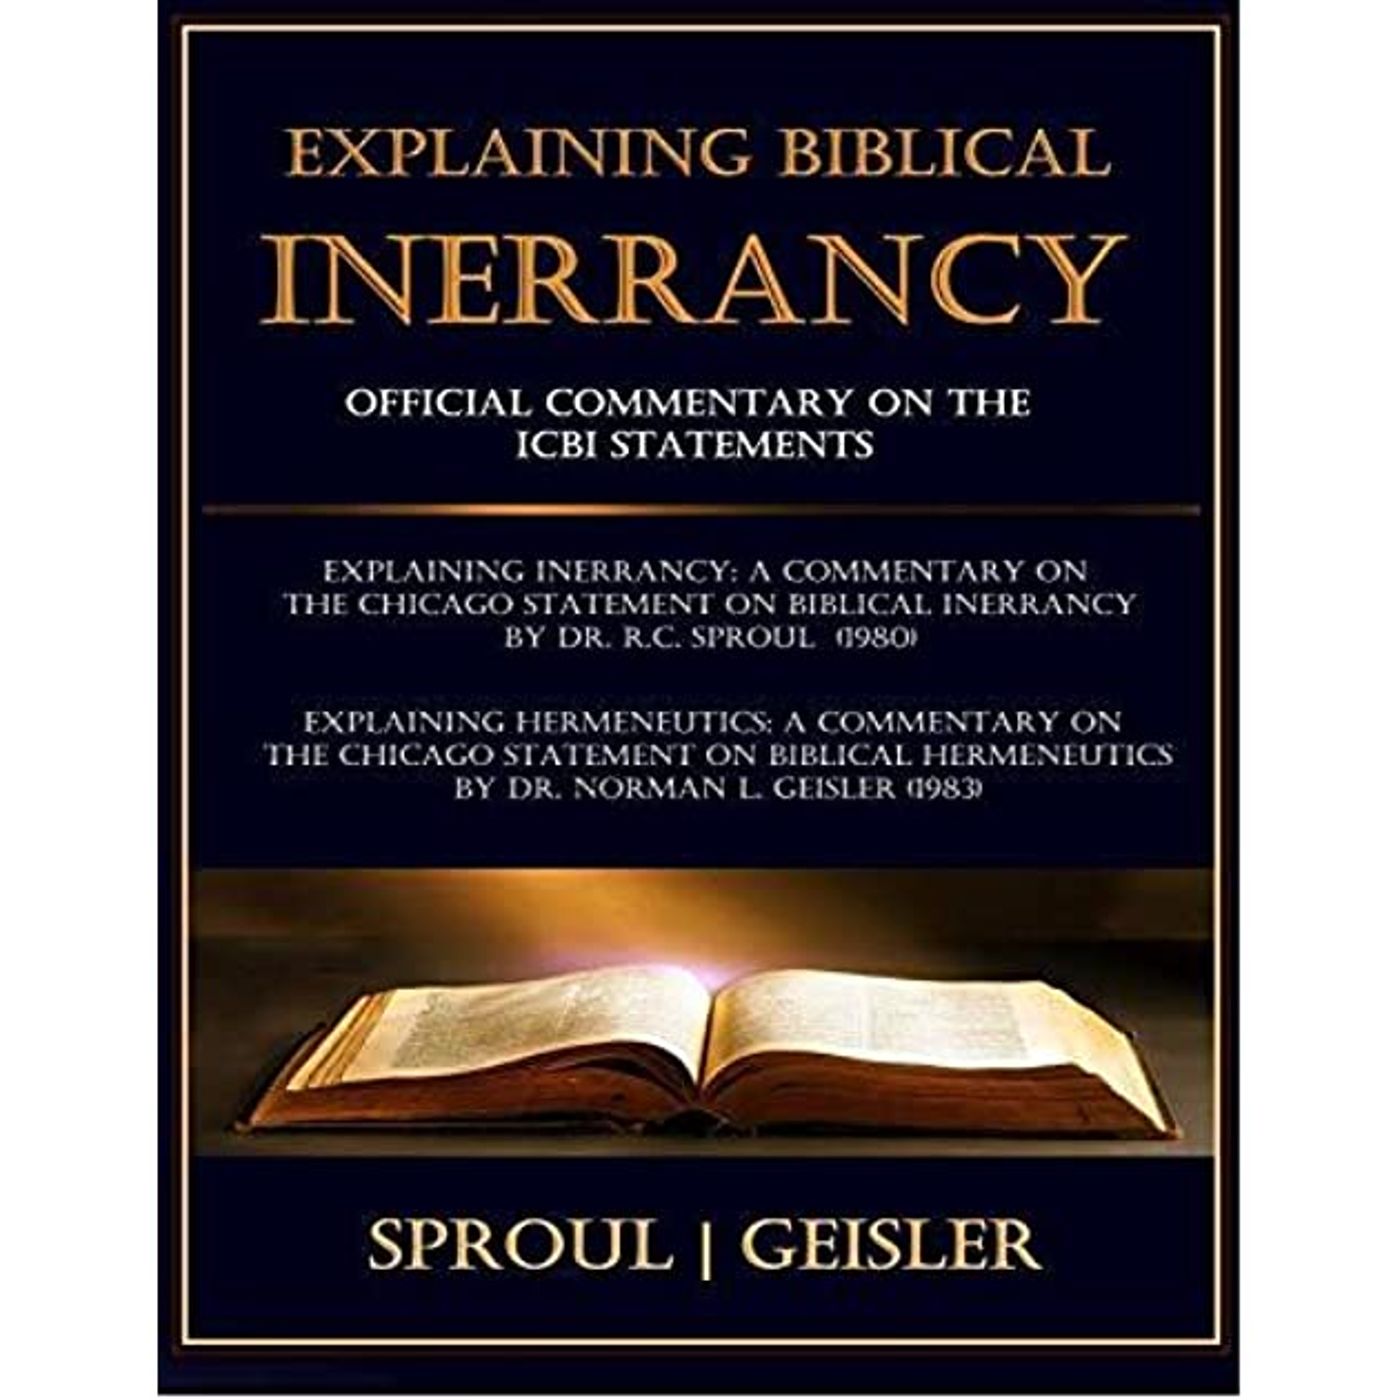 Important Documents on Biblical Inerrancy and Hermeneutics